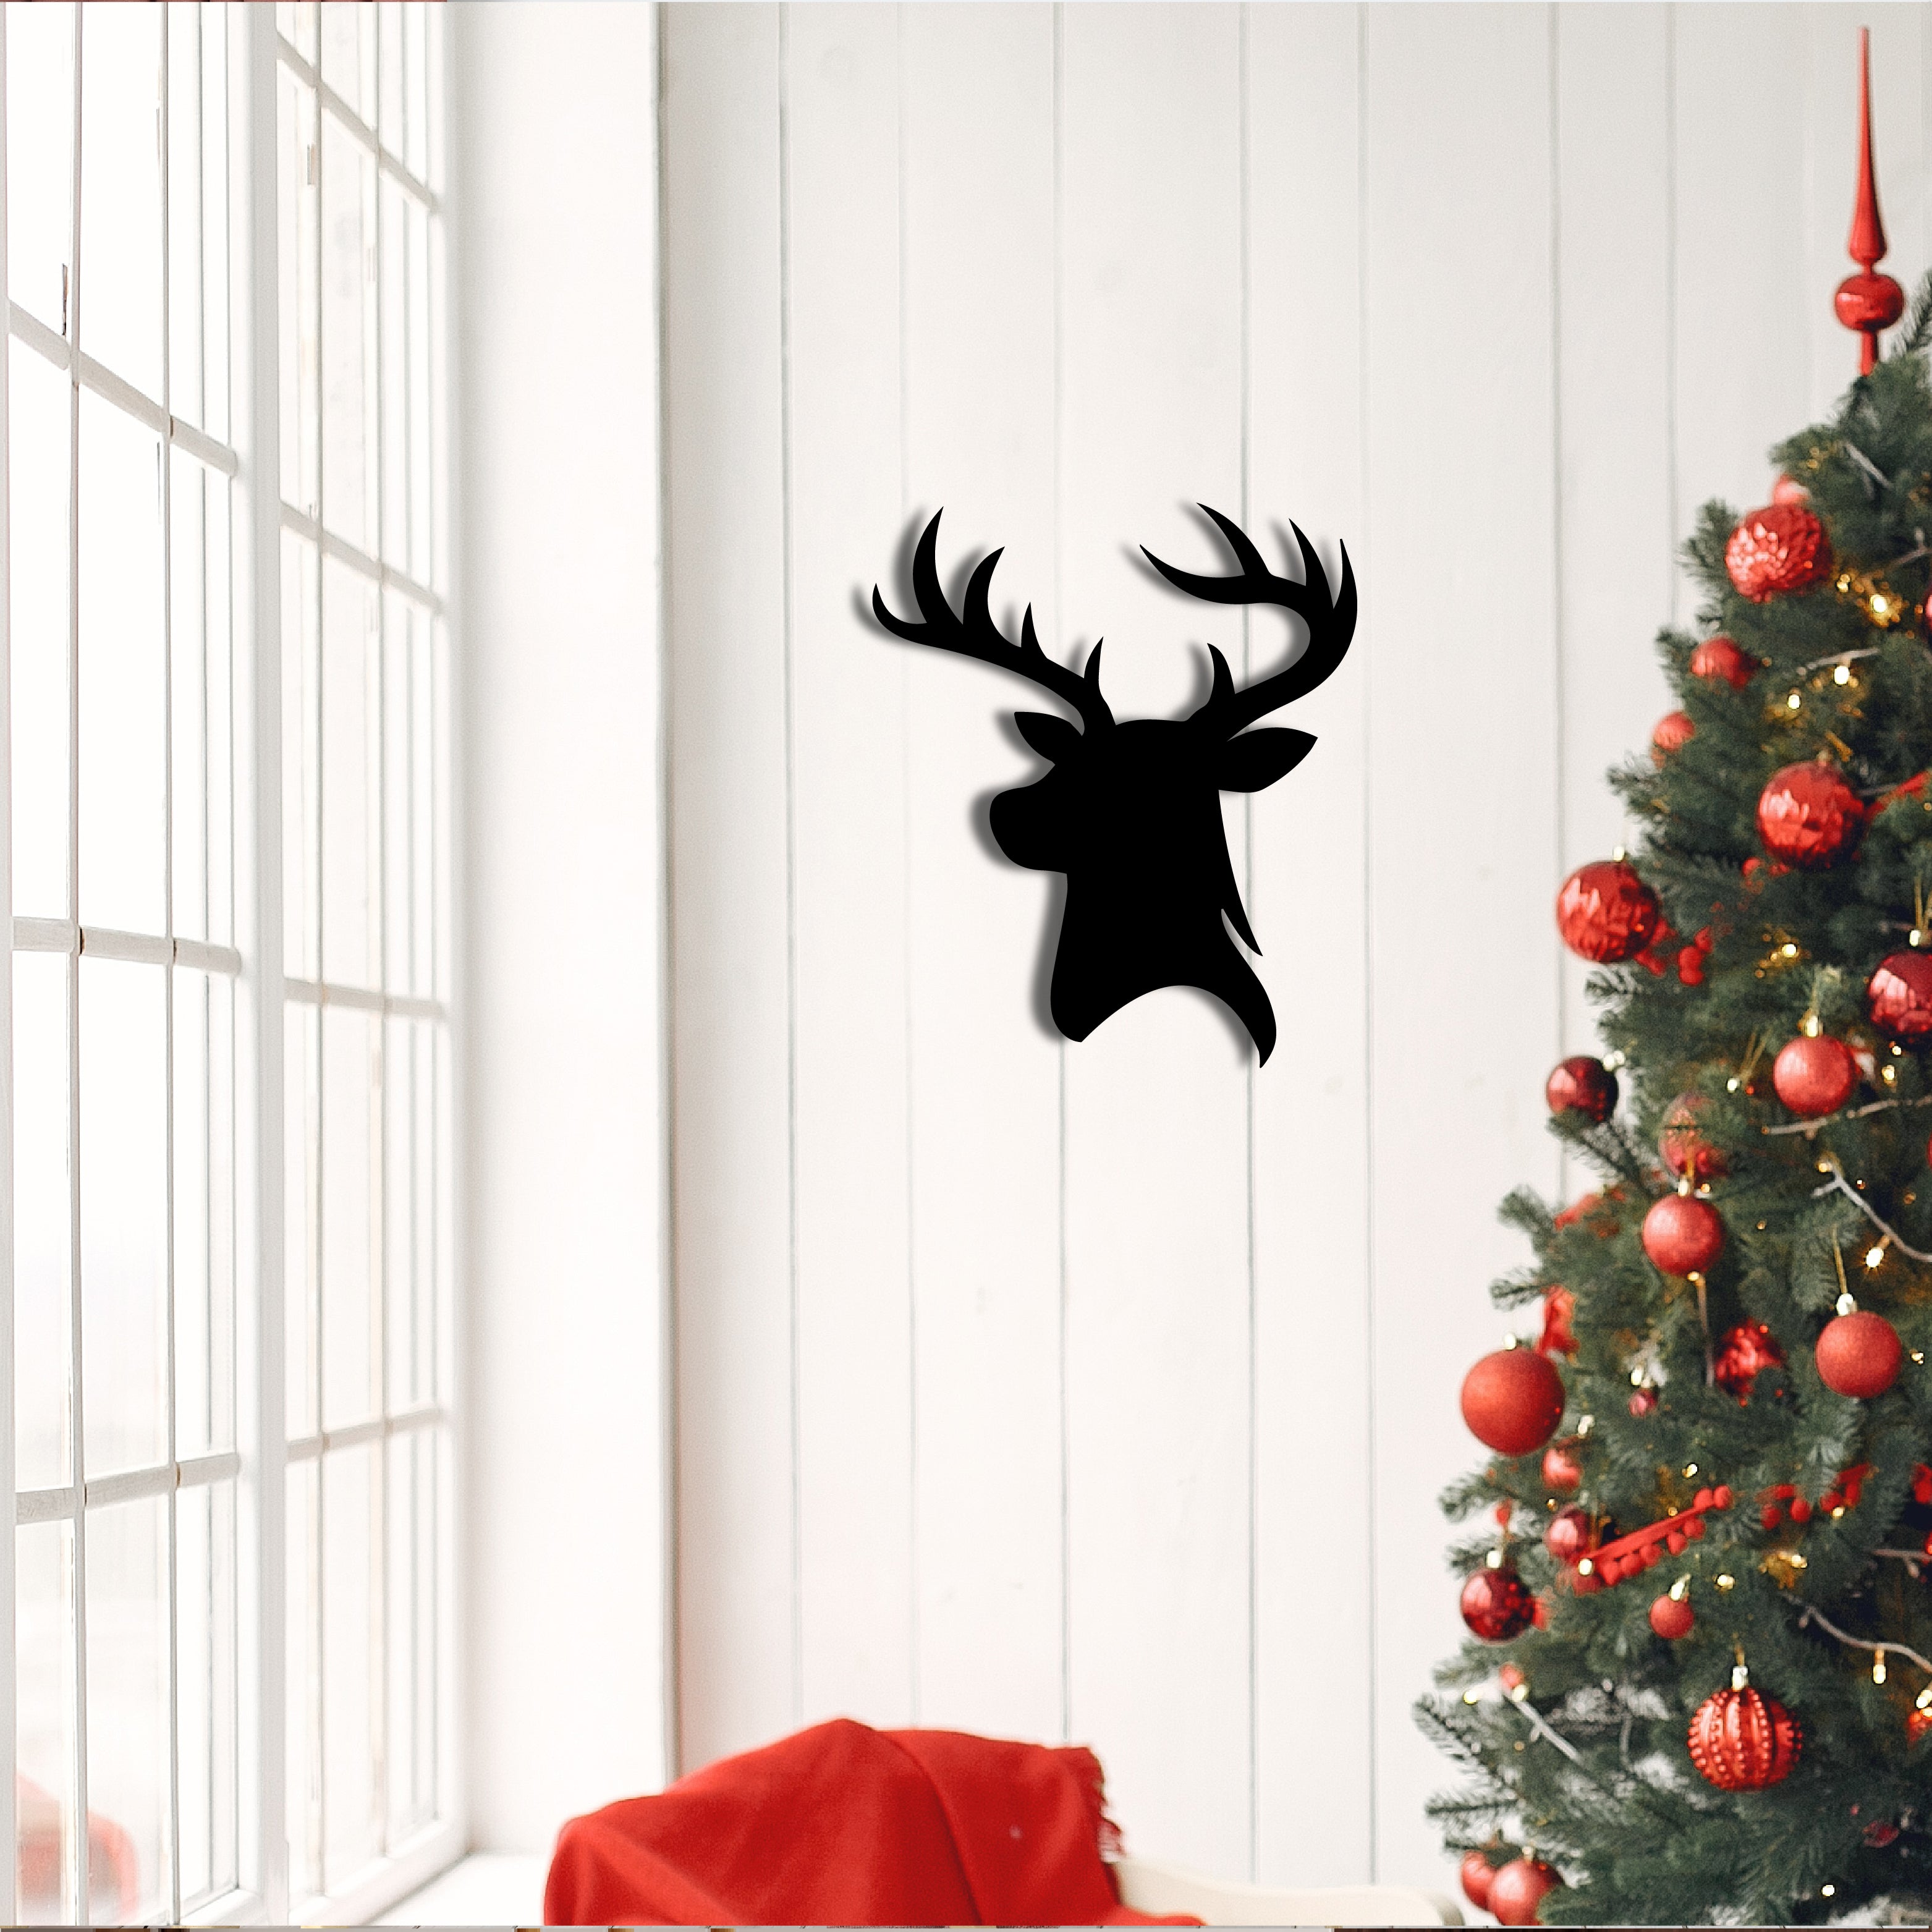 Reindeer Black Engineered Wood Wall Art Cutout, Ready To Hang Home Decor 1